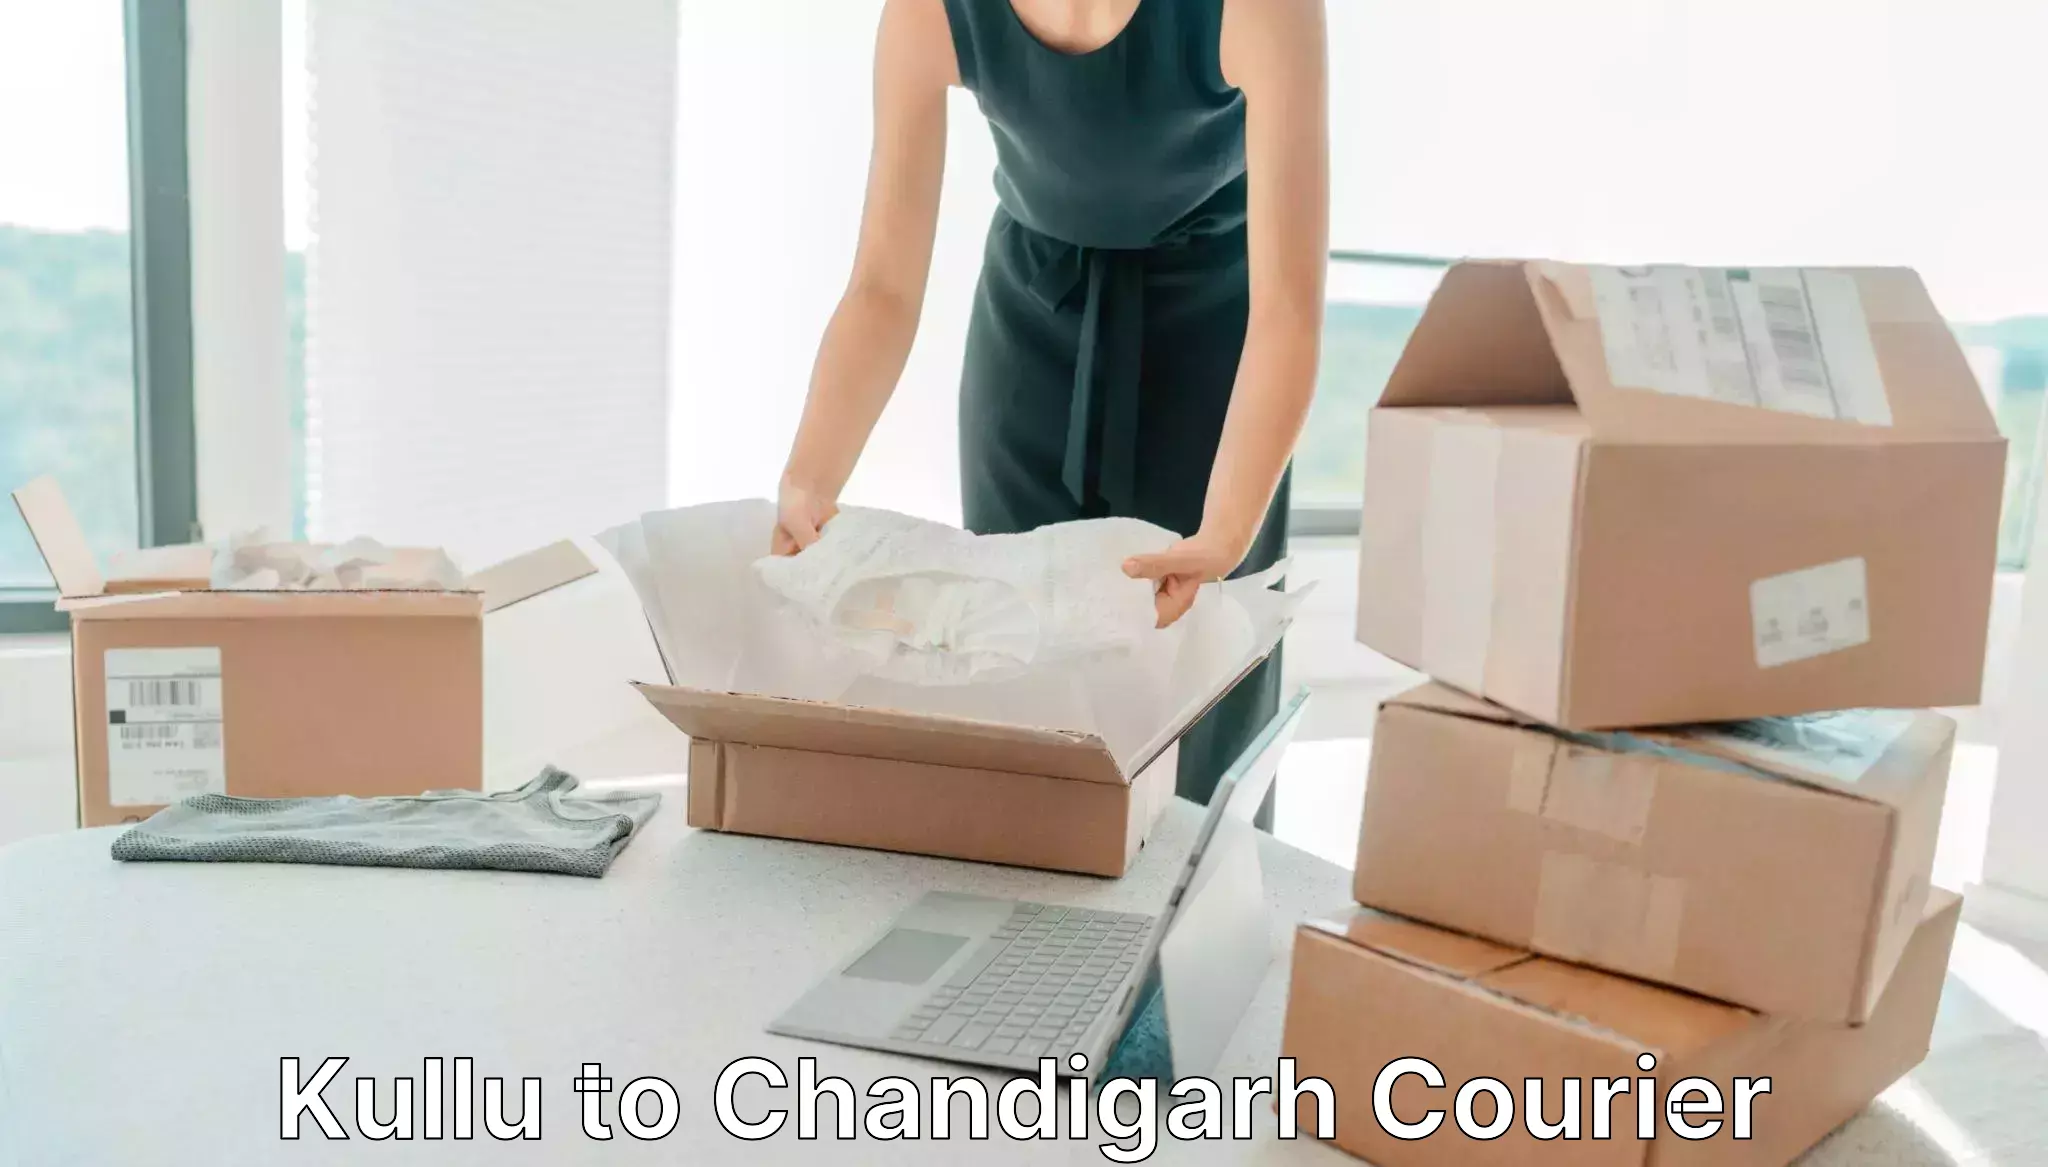 Courier service efficiency Kullu to Kharar